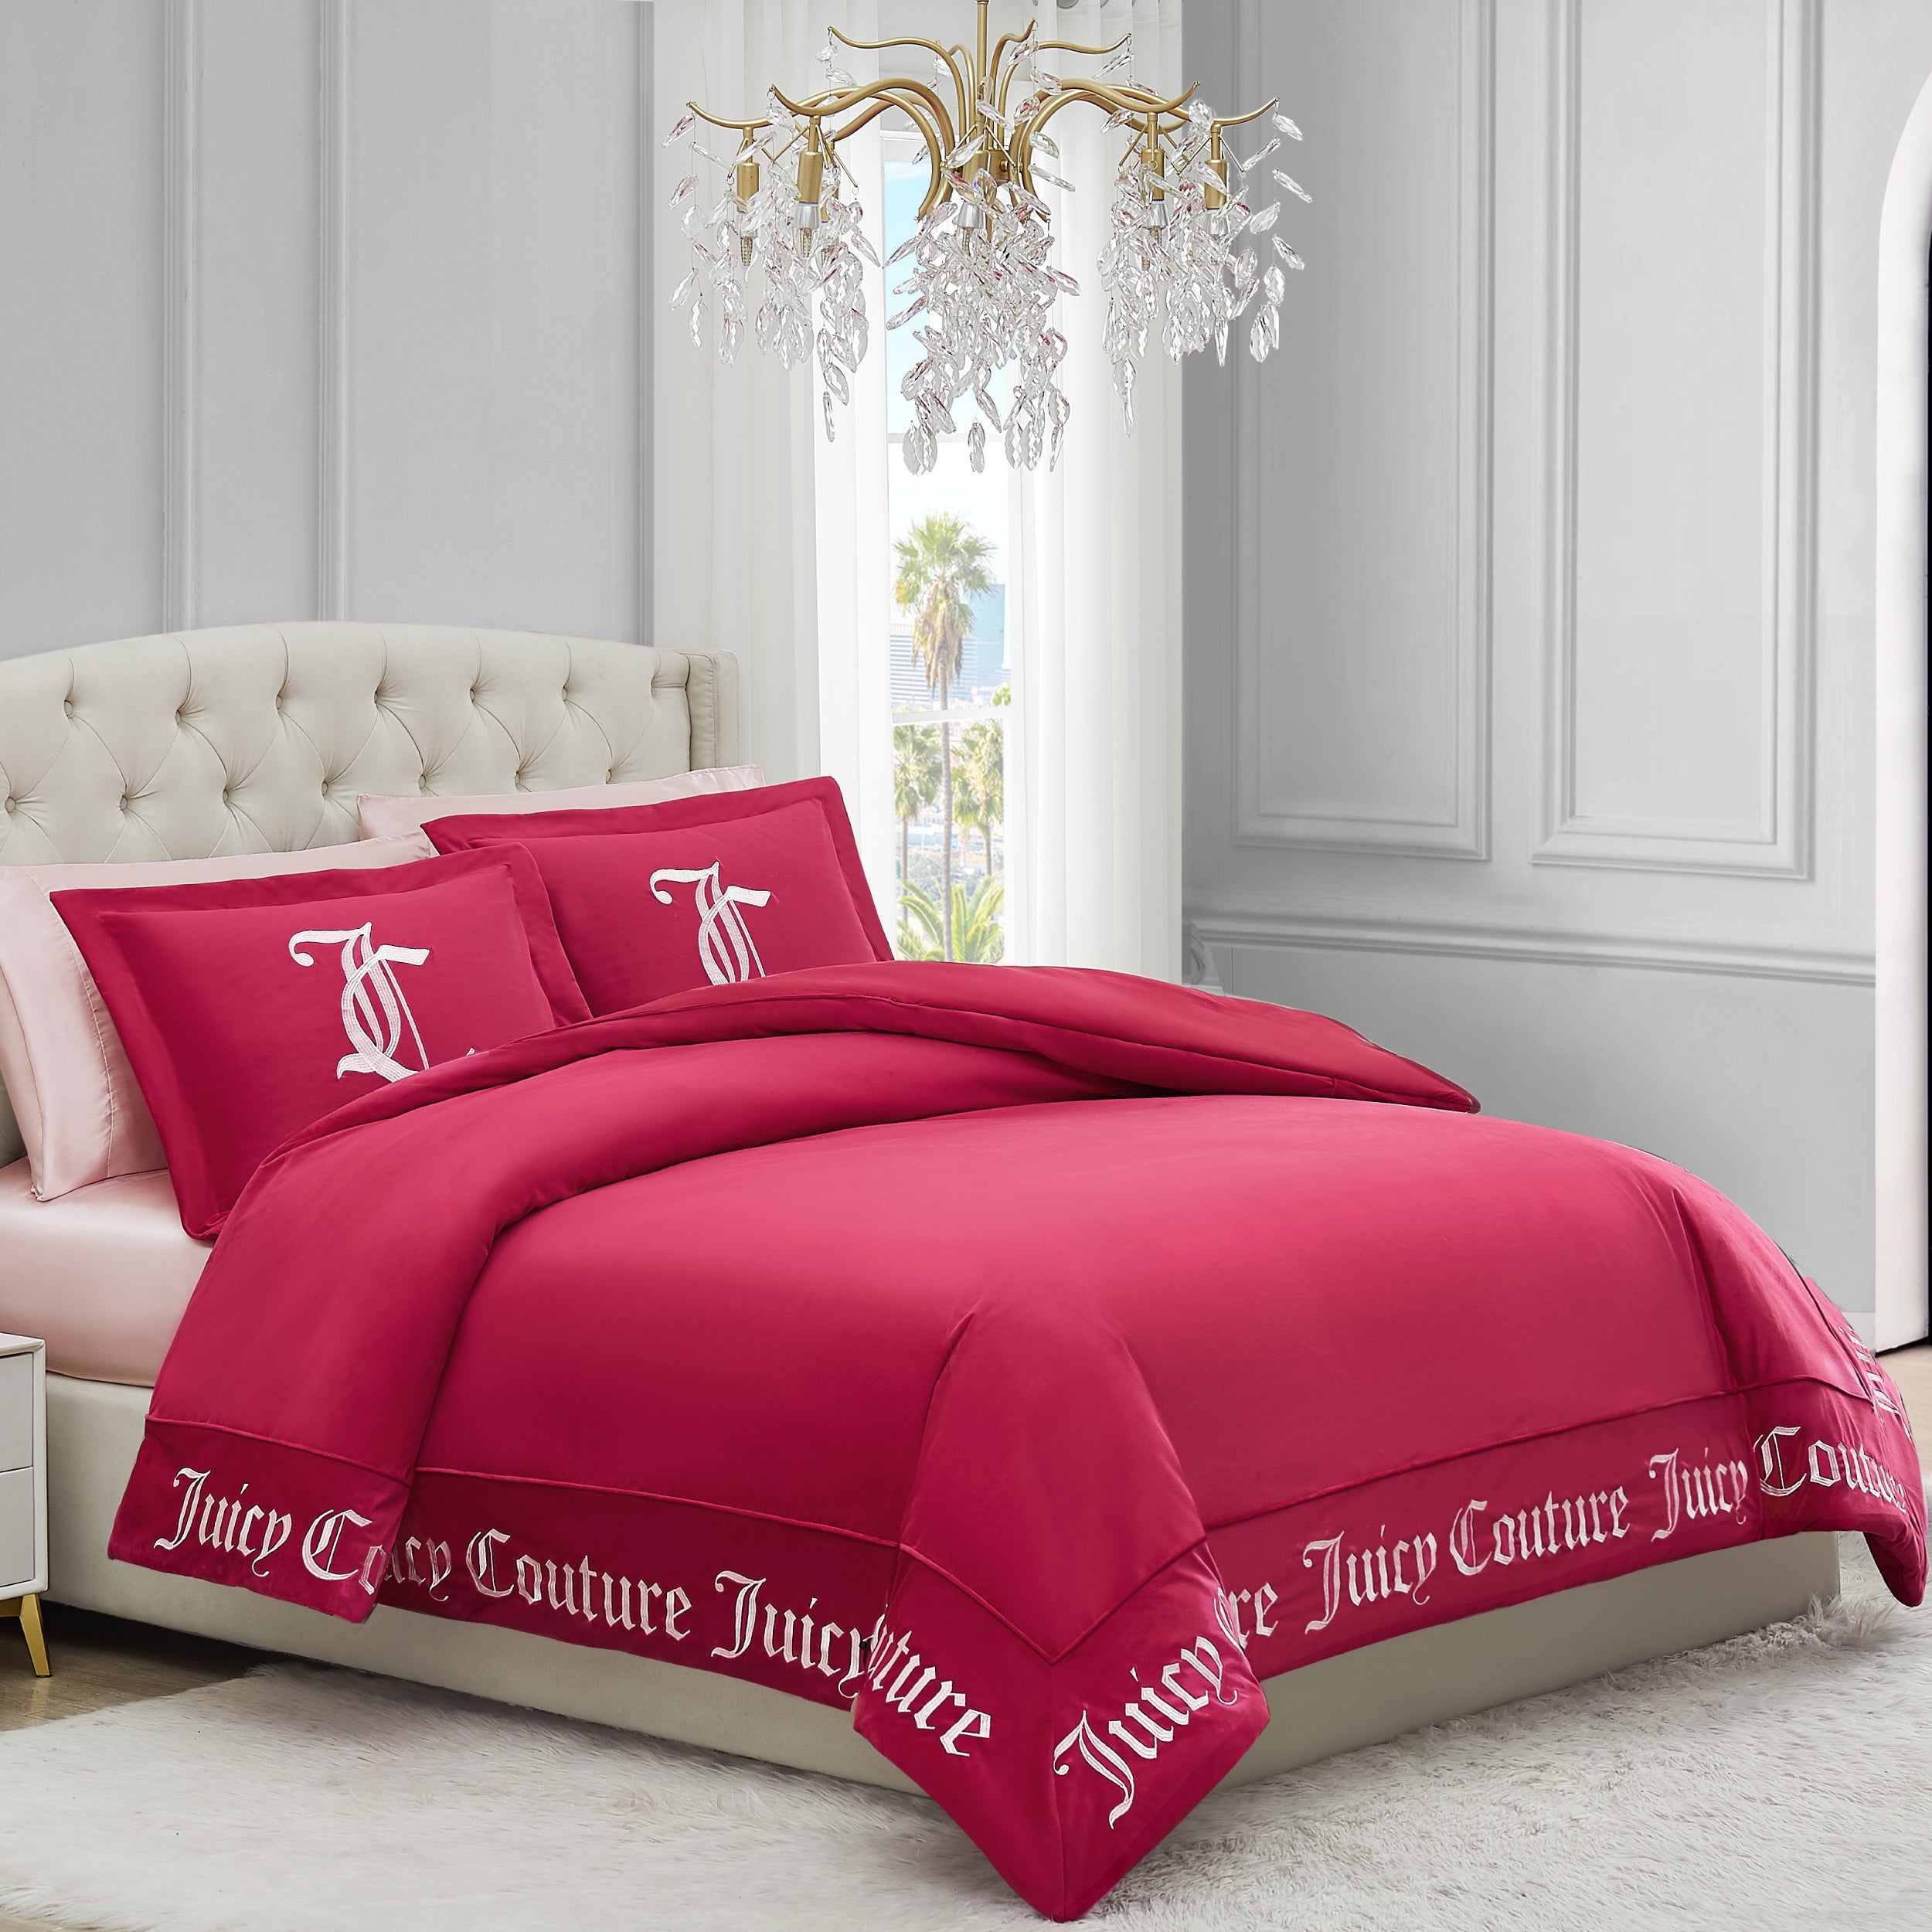 Gothic Comforter Set - Juicy Couture